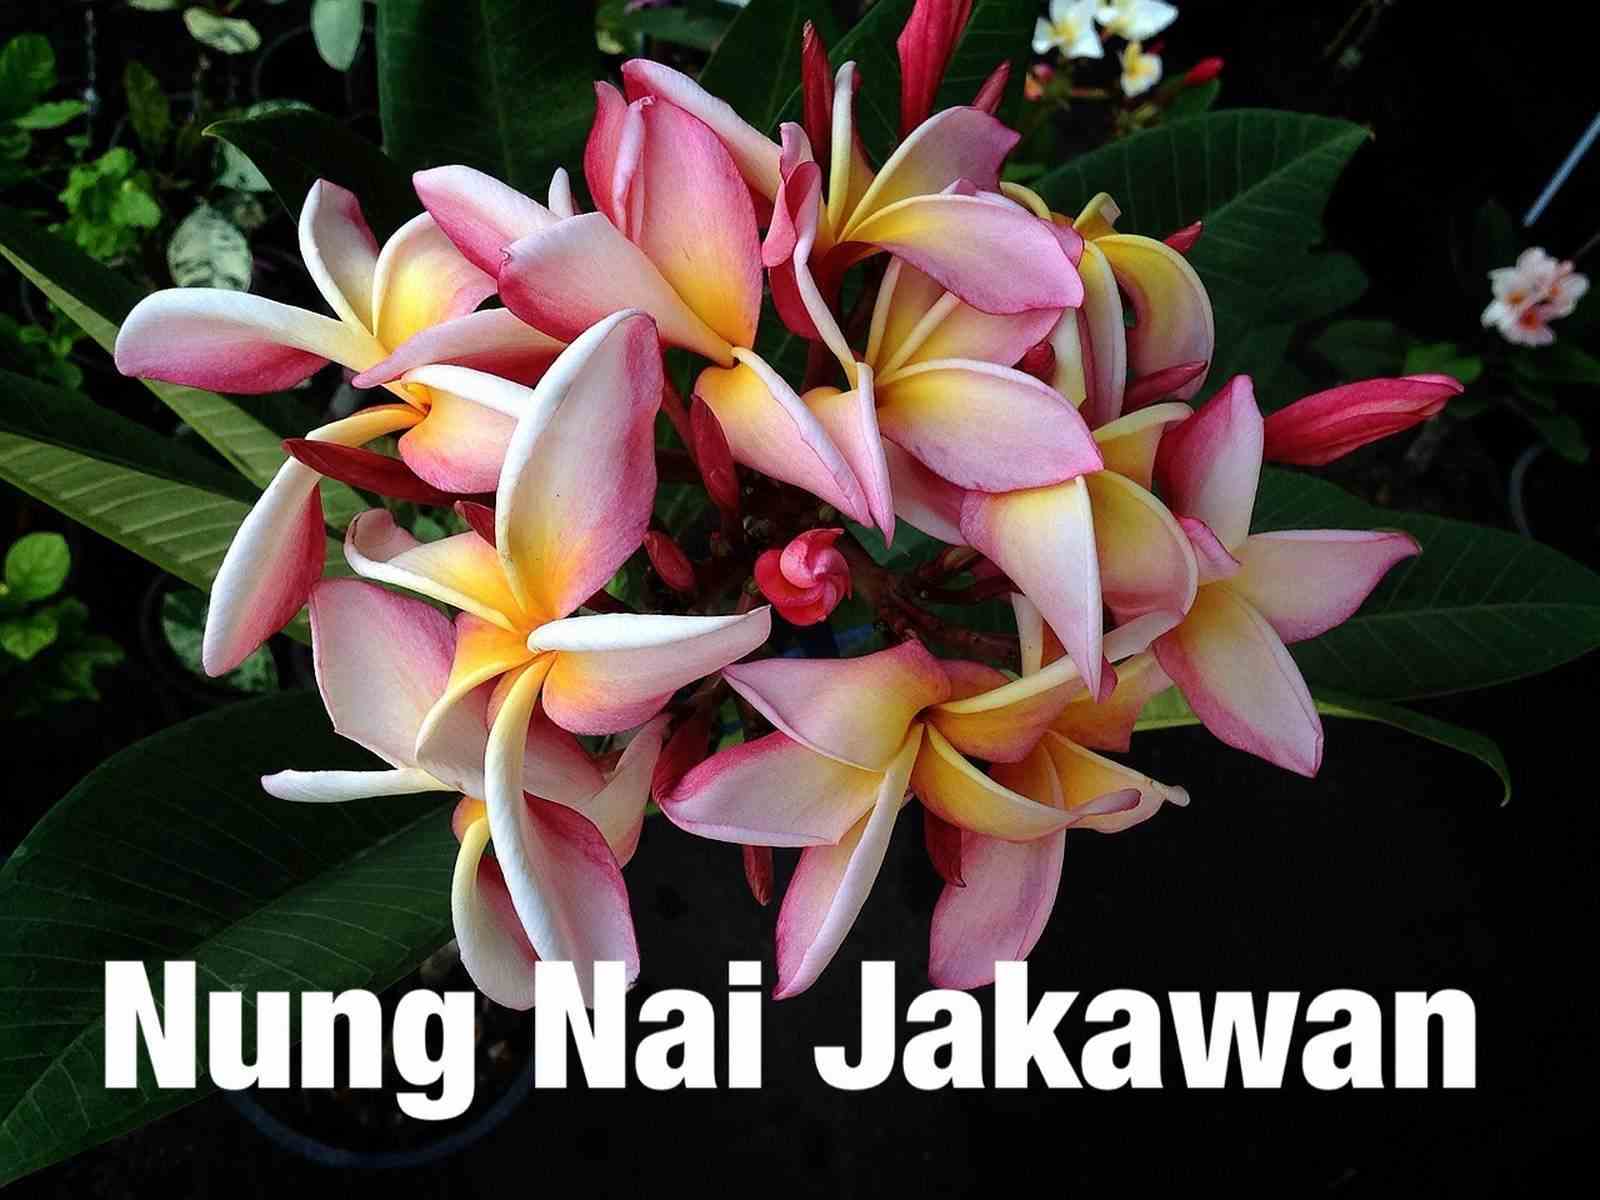 Plumeria rubra "nung nai jakawan" (frangipanier) taille pot de 2 litres ? 20/30 cm -   blanc/jaune/rose